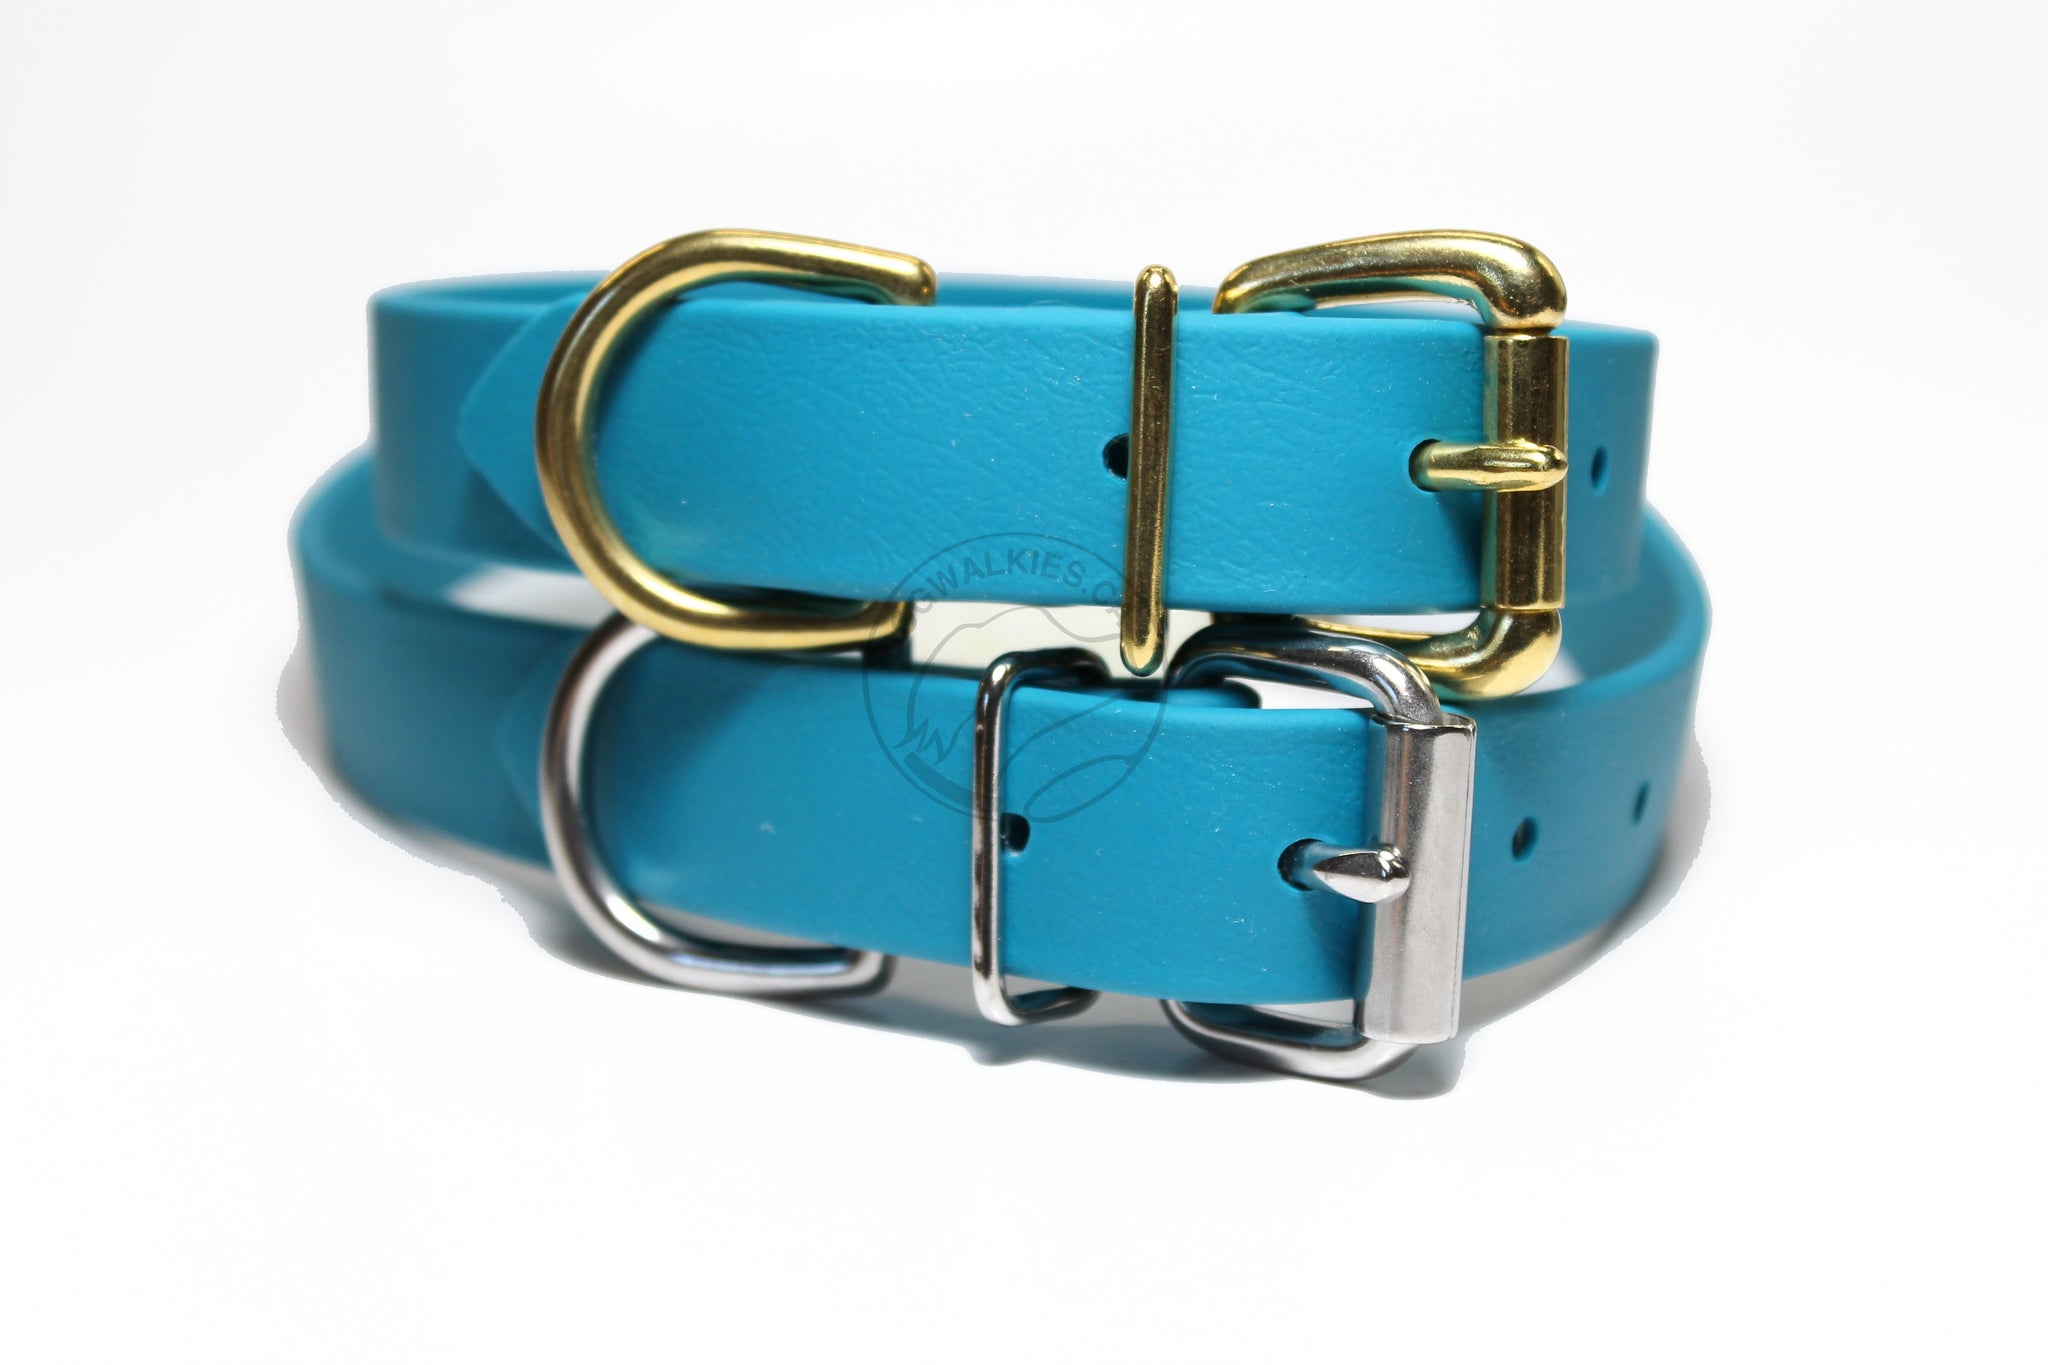 New Oasis Blue Biothane Dog Collar - 1 inch (25mm) wide